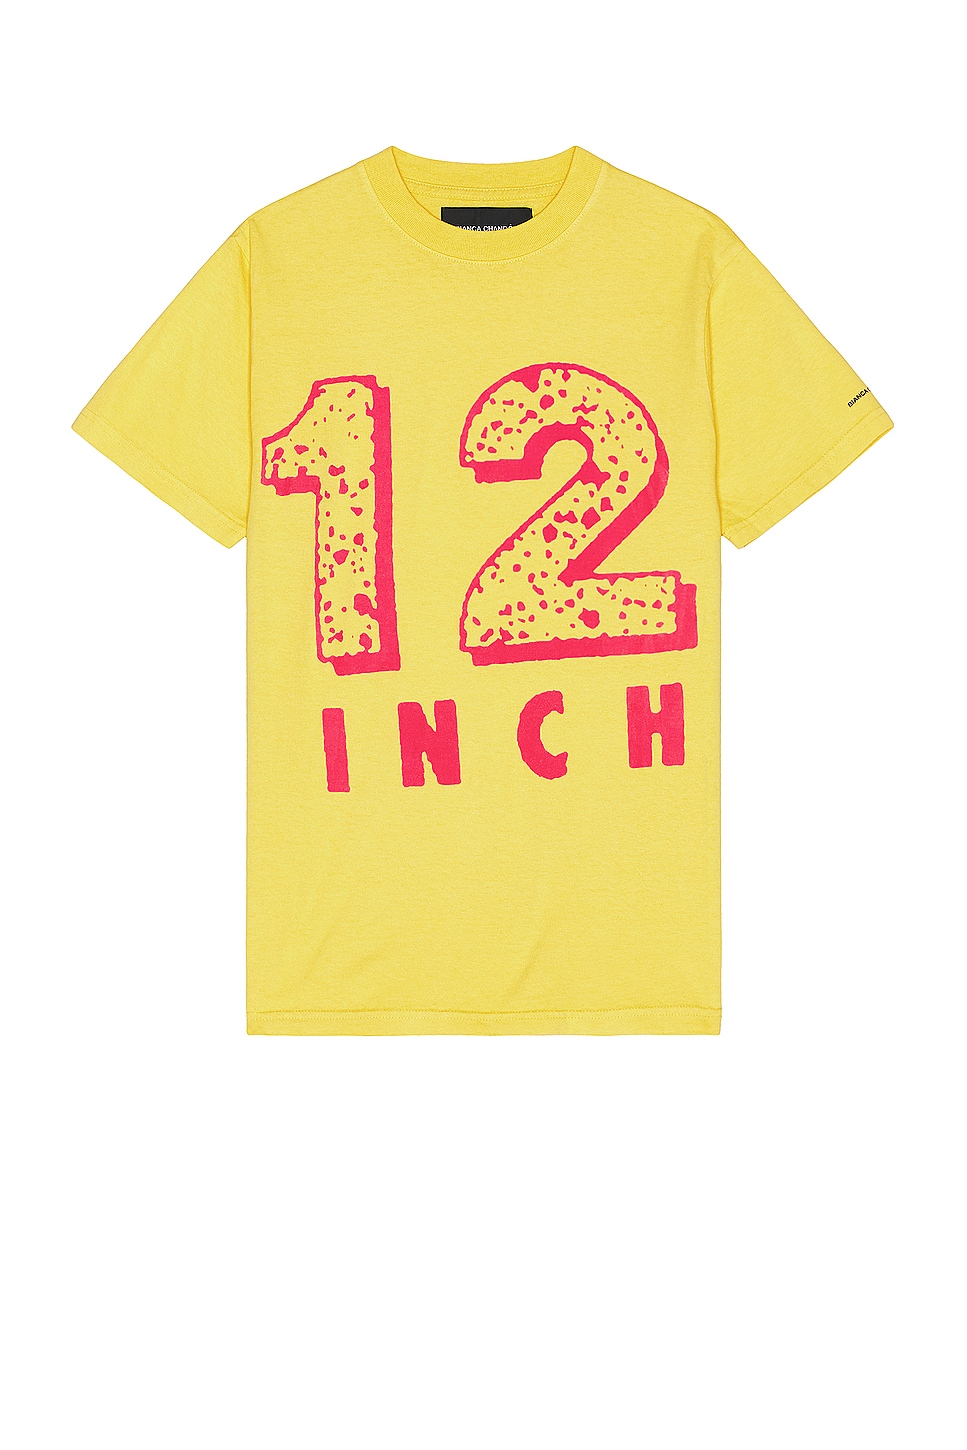 Image 1 of Bianca Chandon 12 Inch T-Shirt in Yellow